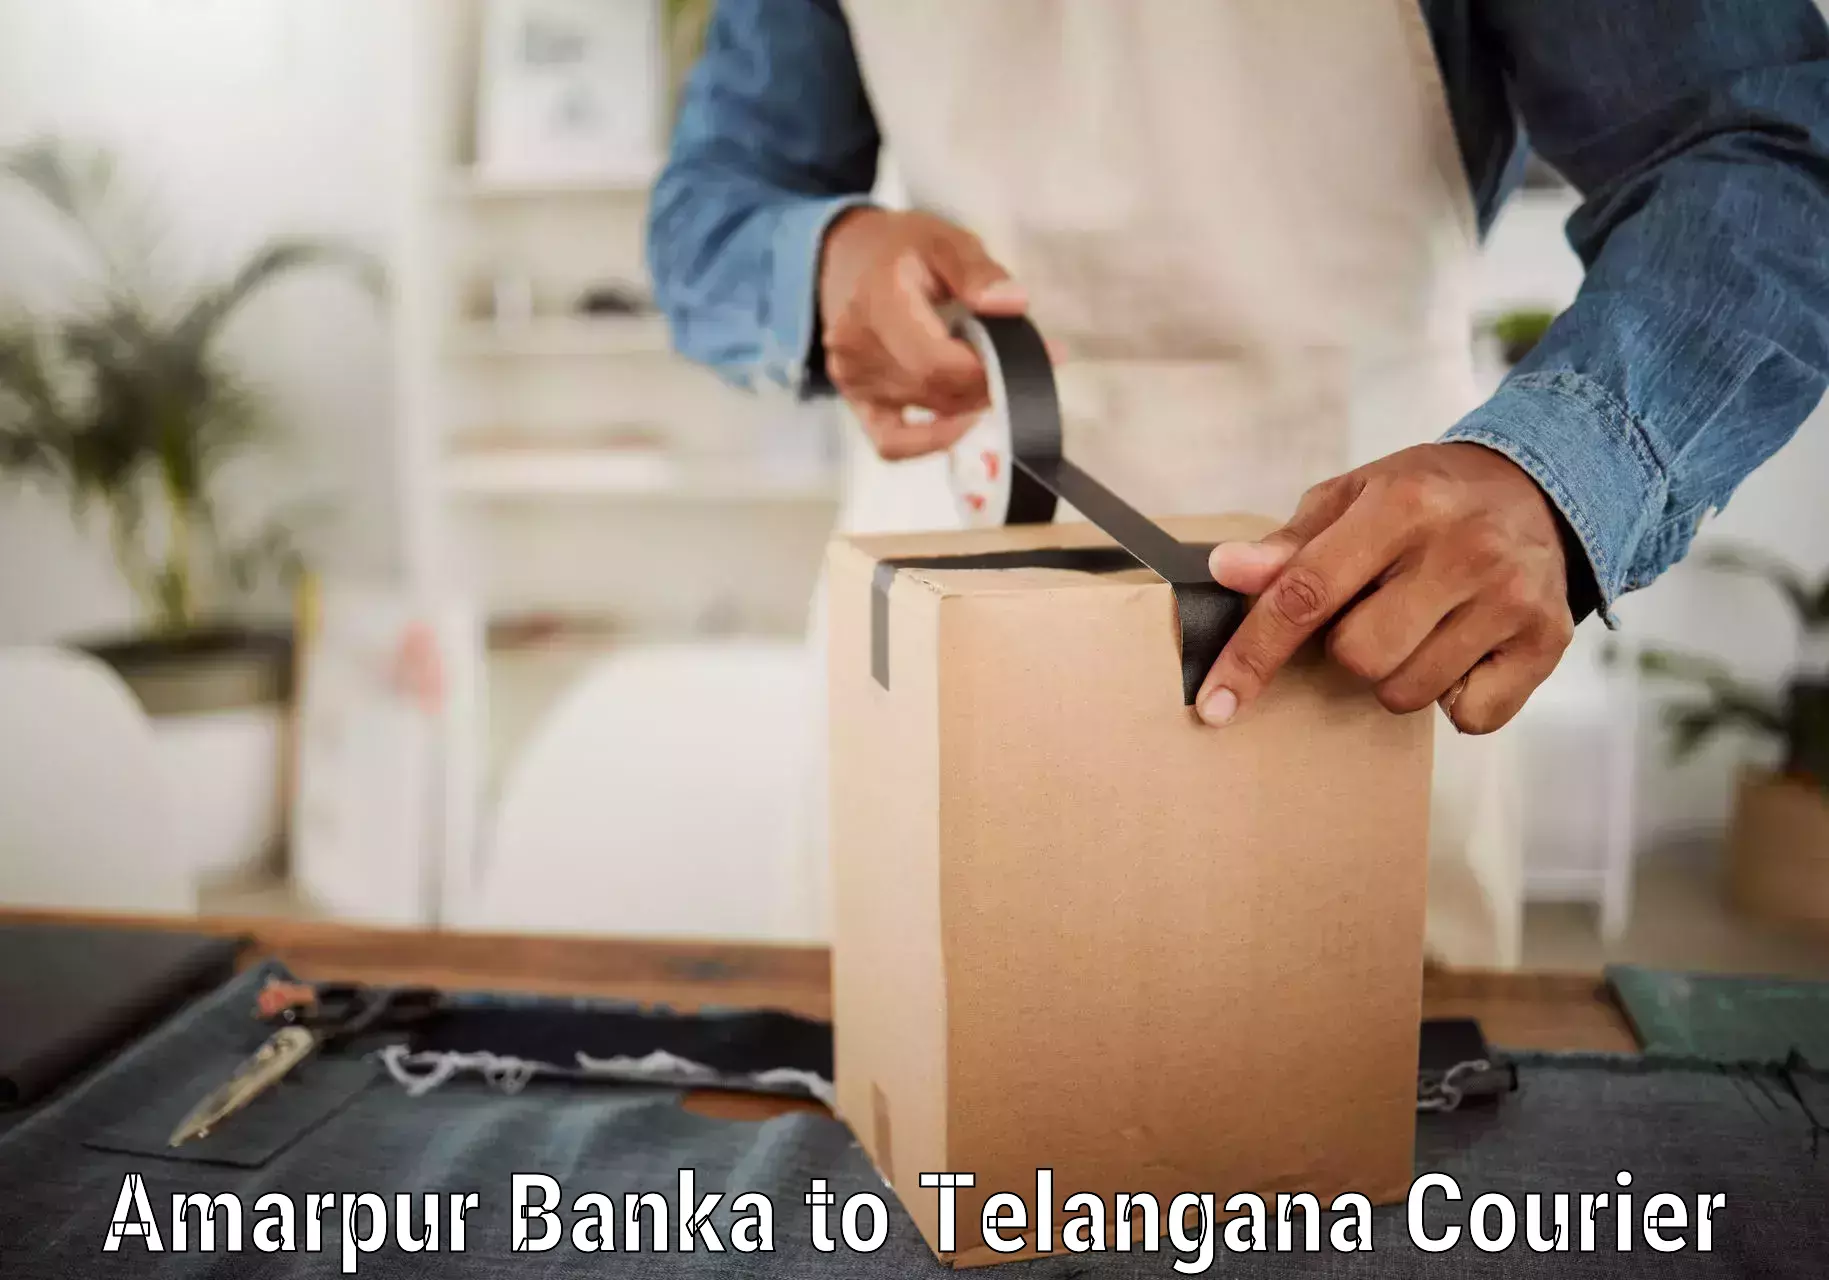 Courier service innovation Amarpur Banka to Achampet